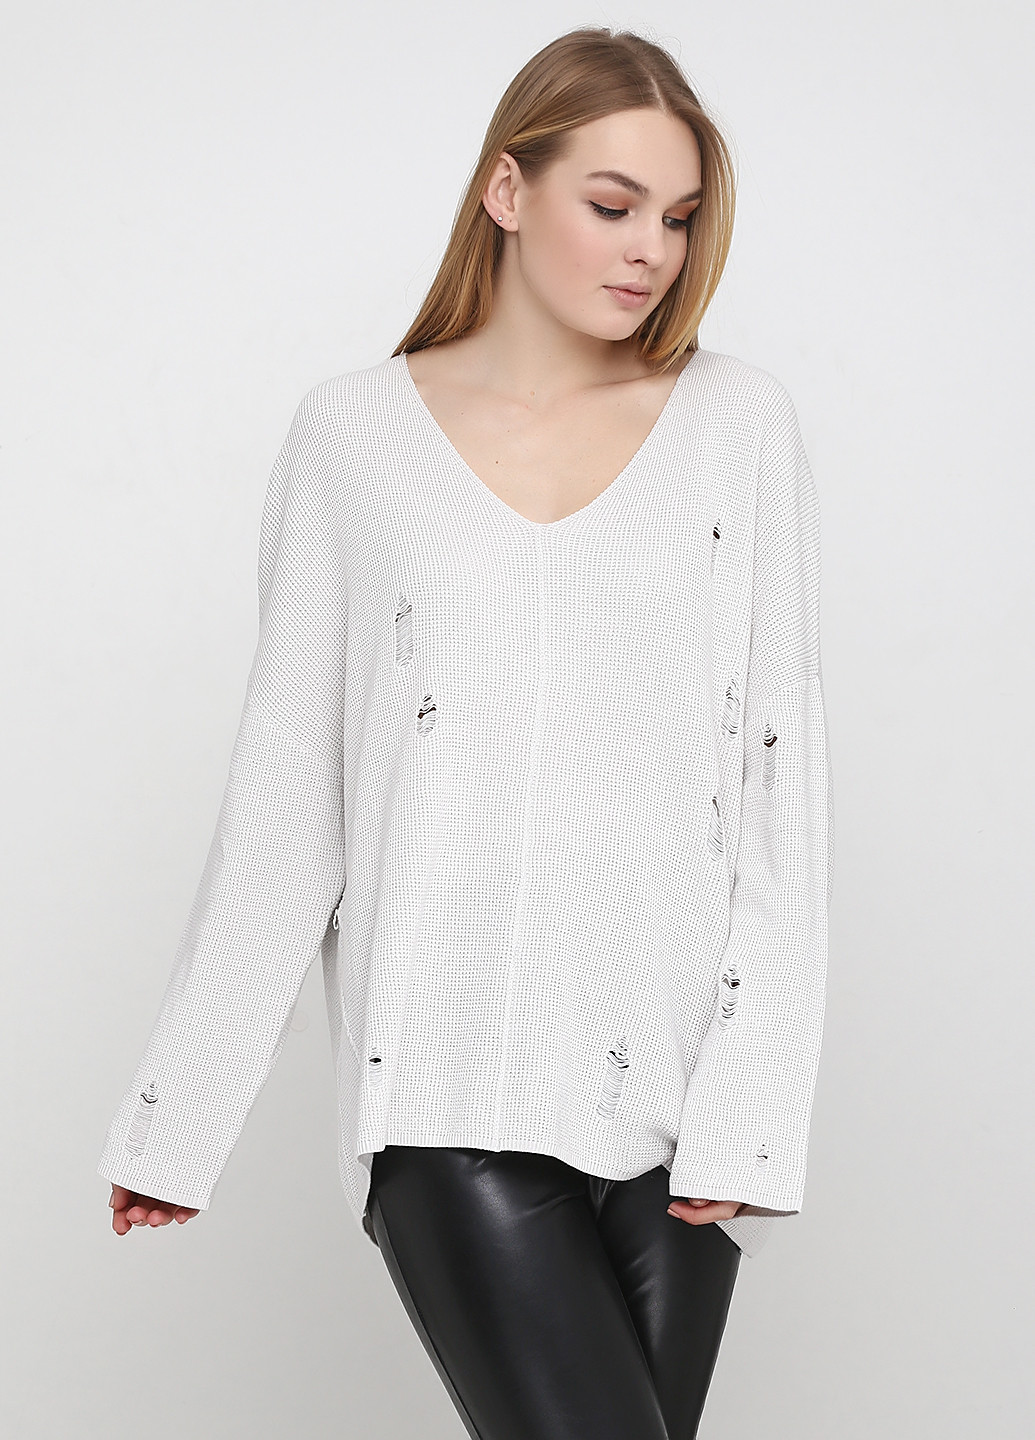 Белый демисезонный пуловер пуловер H&M